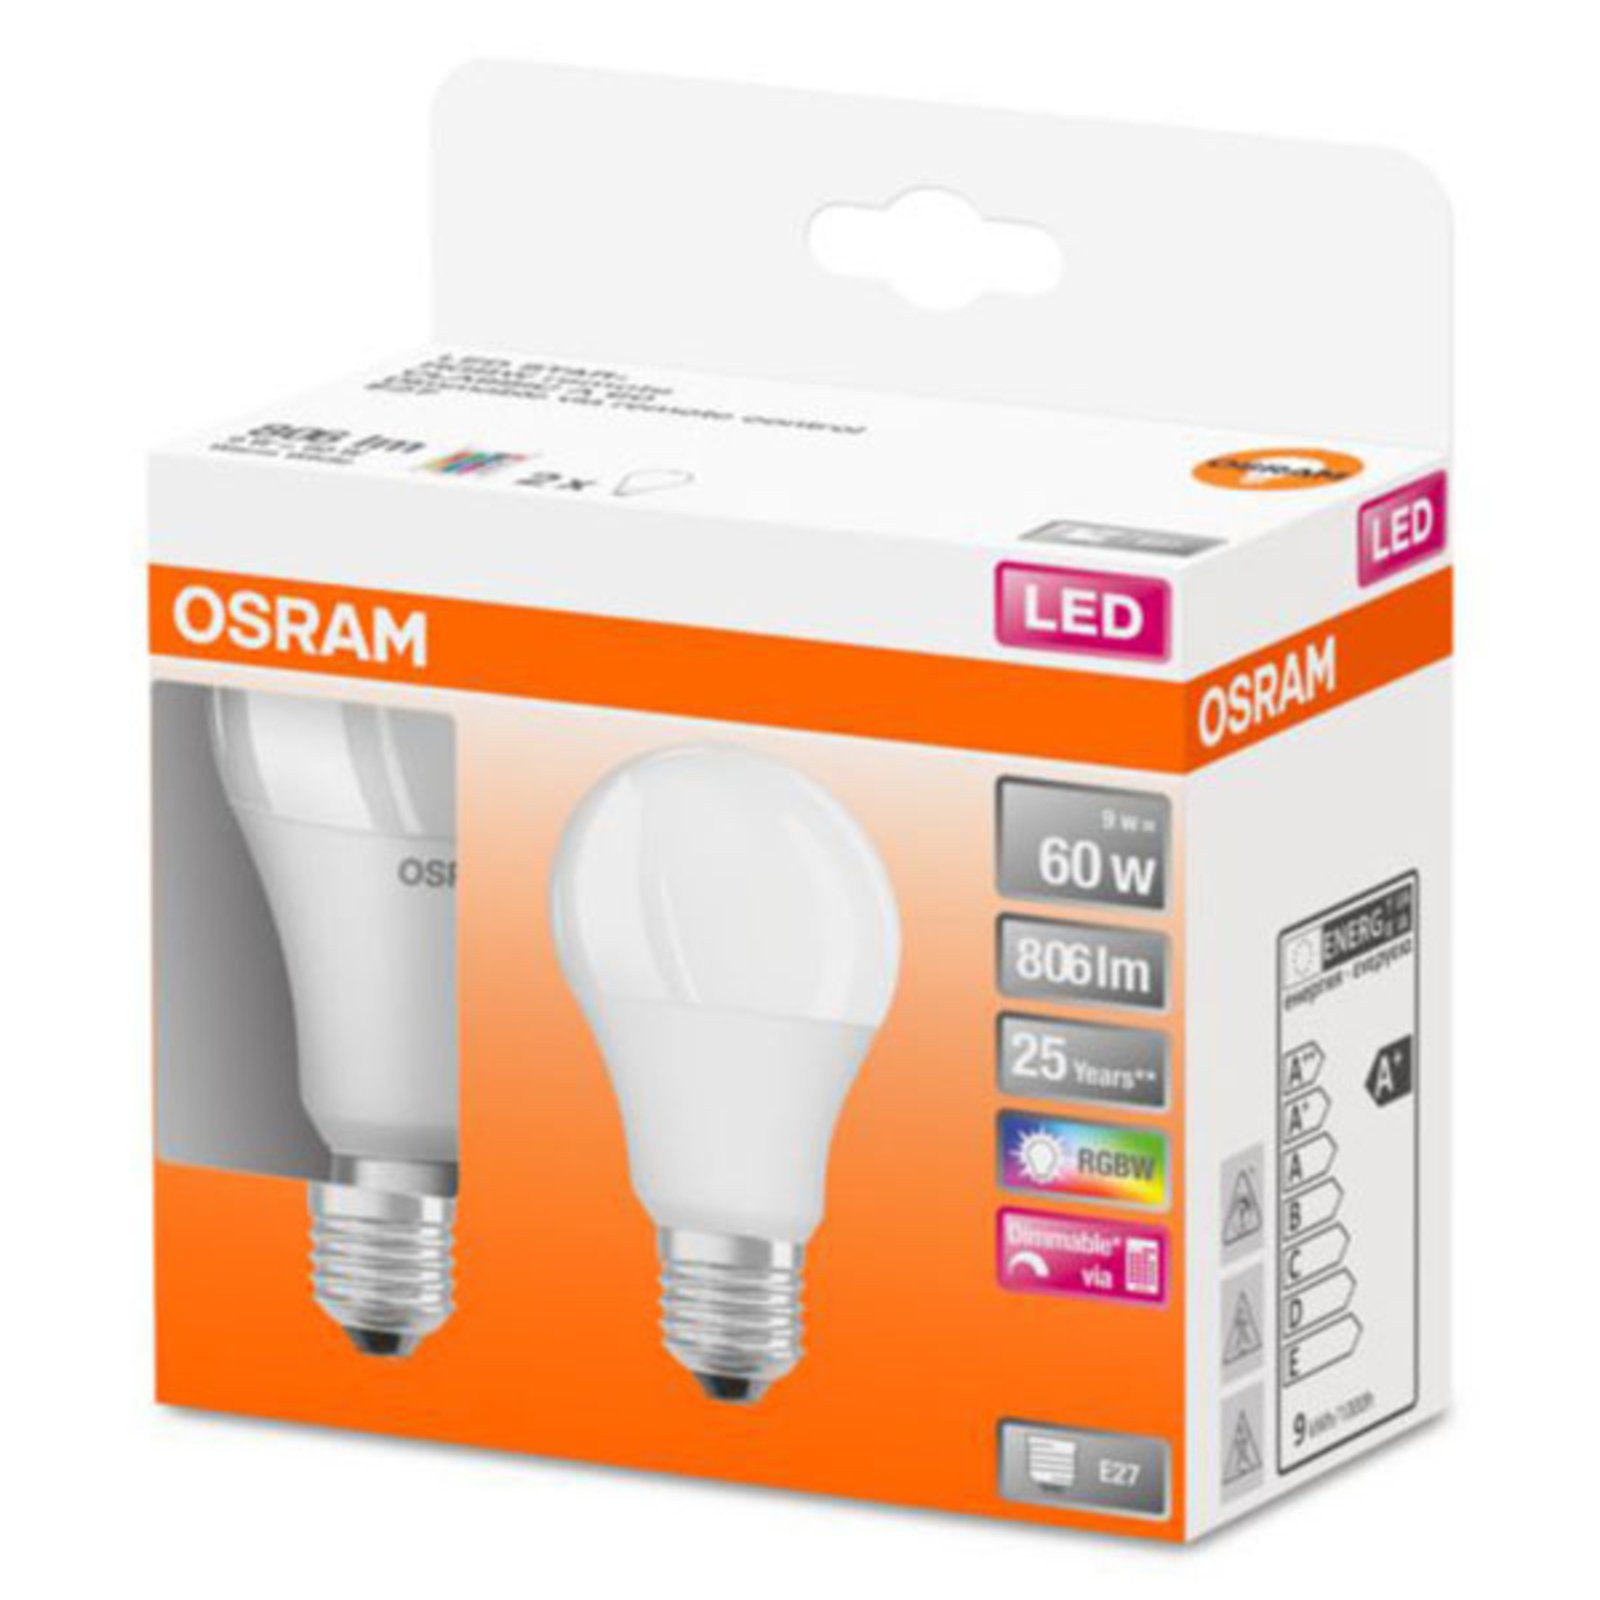 OSRAM LED lamp E27 9,7W Star+ RemoteControl per 2